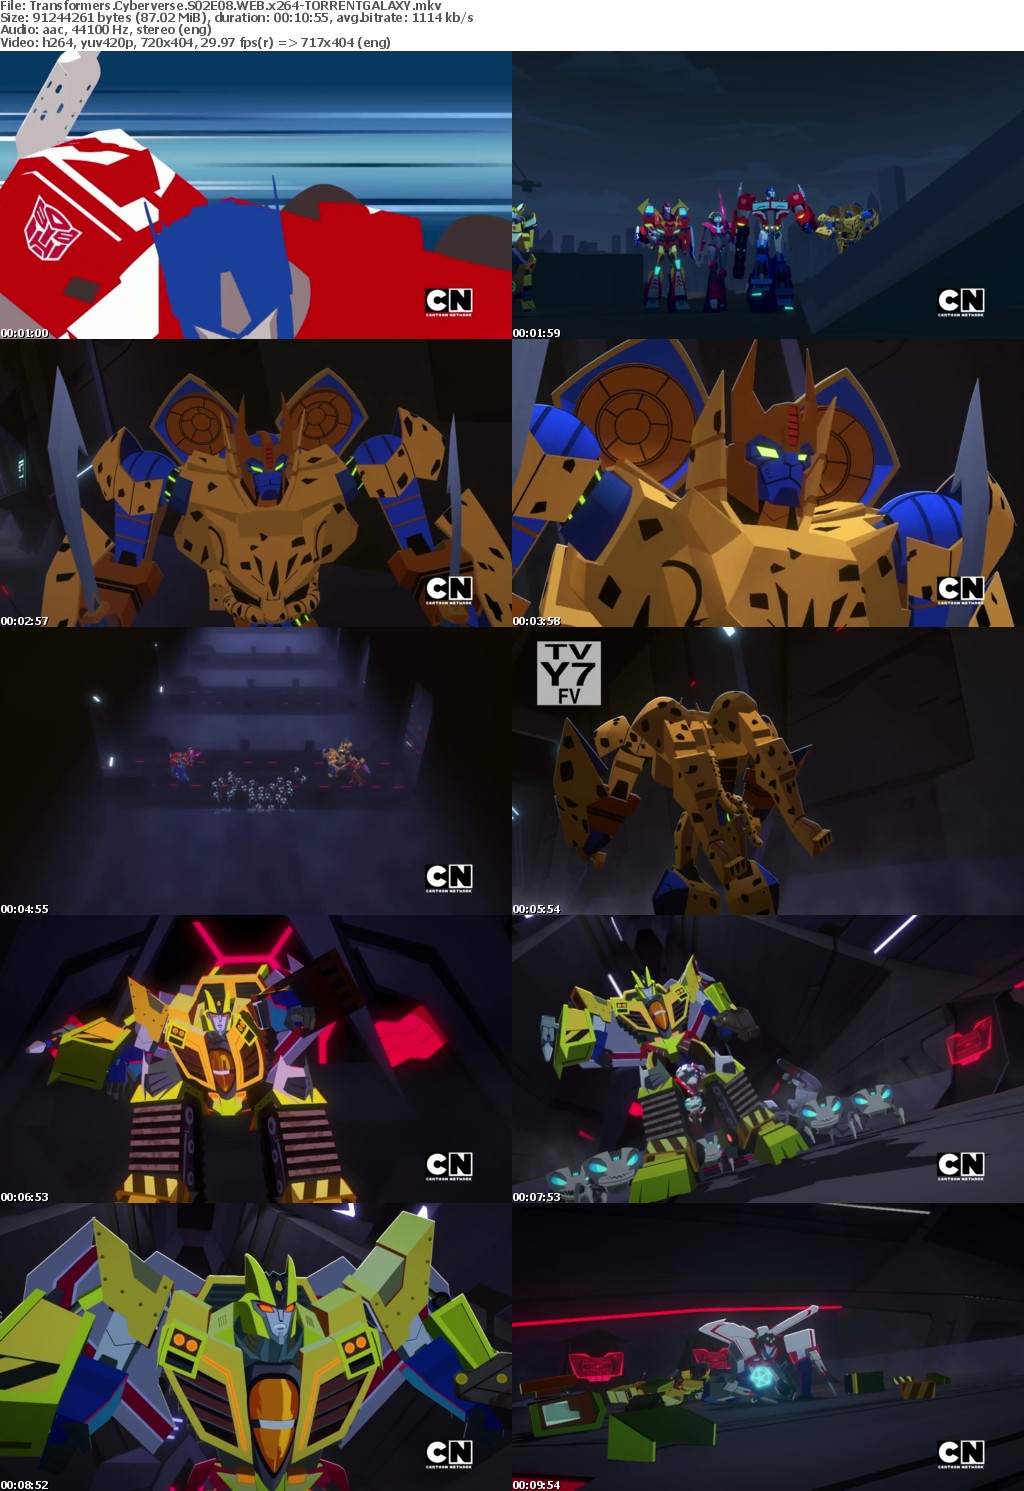 Transformers Cyberverse S02E08 WEB x264-GALAXY